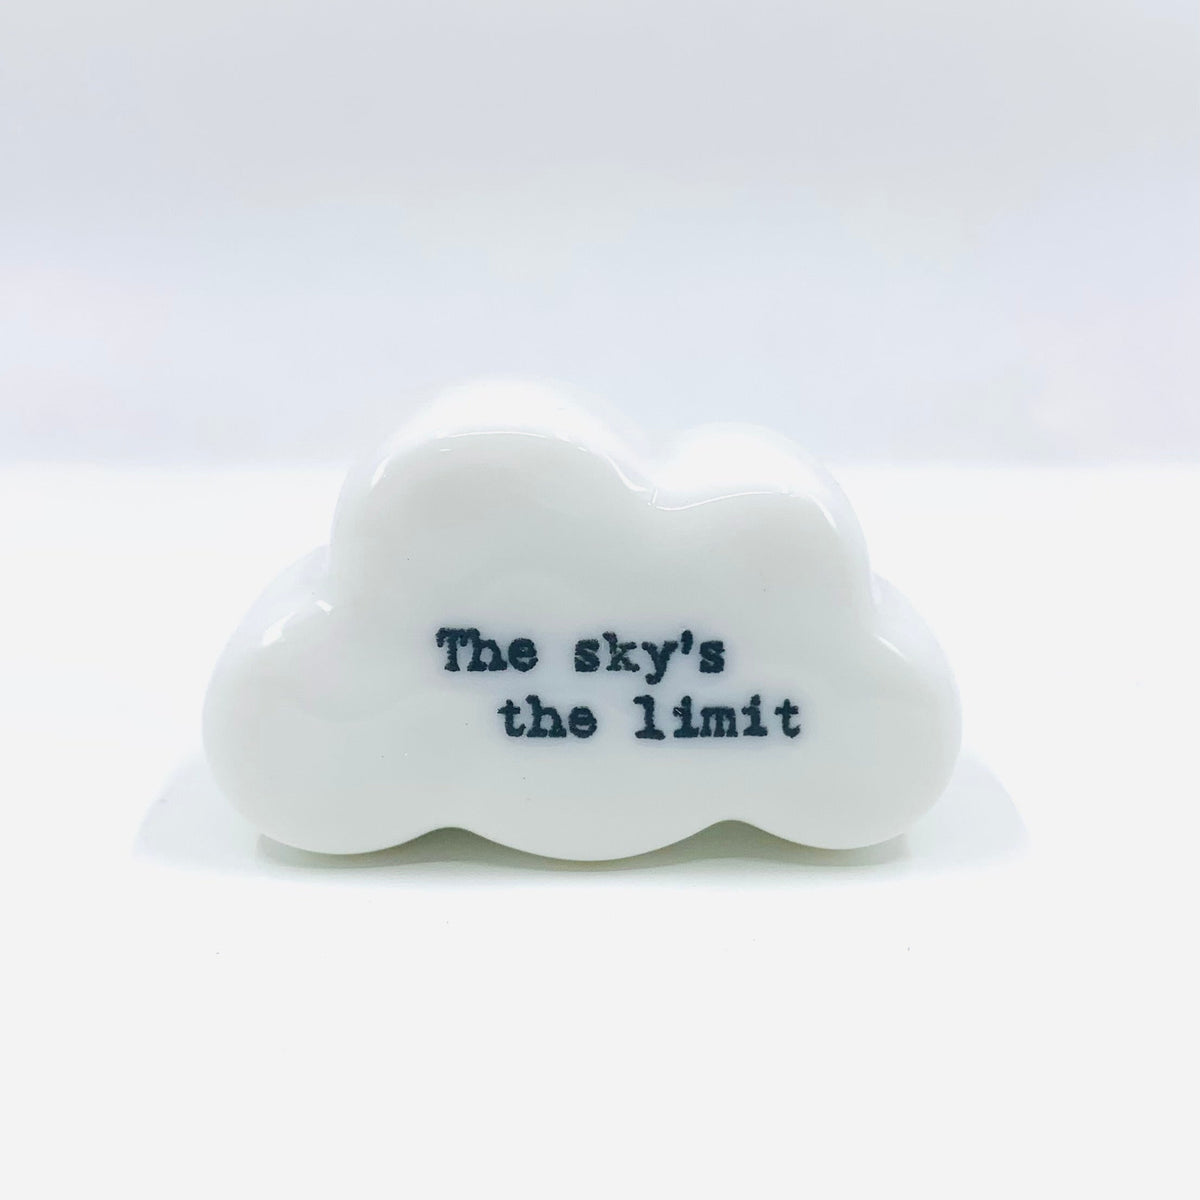 Little Porcelain Cloud Figures Miniature East of India The sky’s the limit 